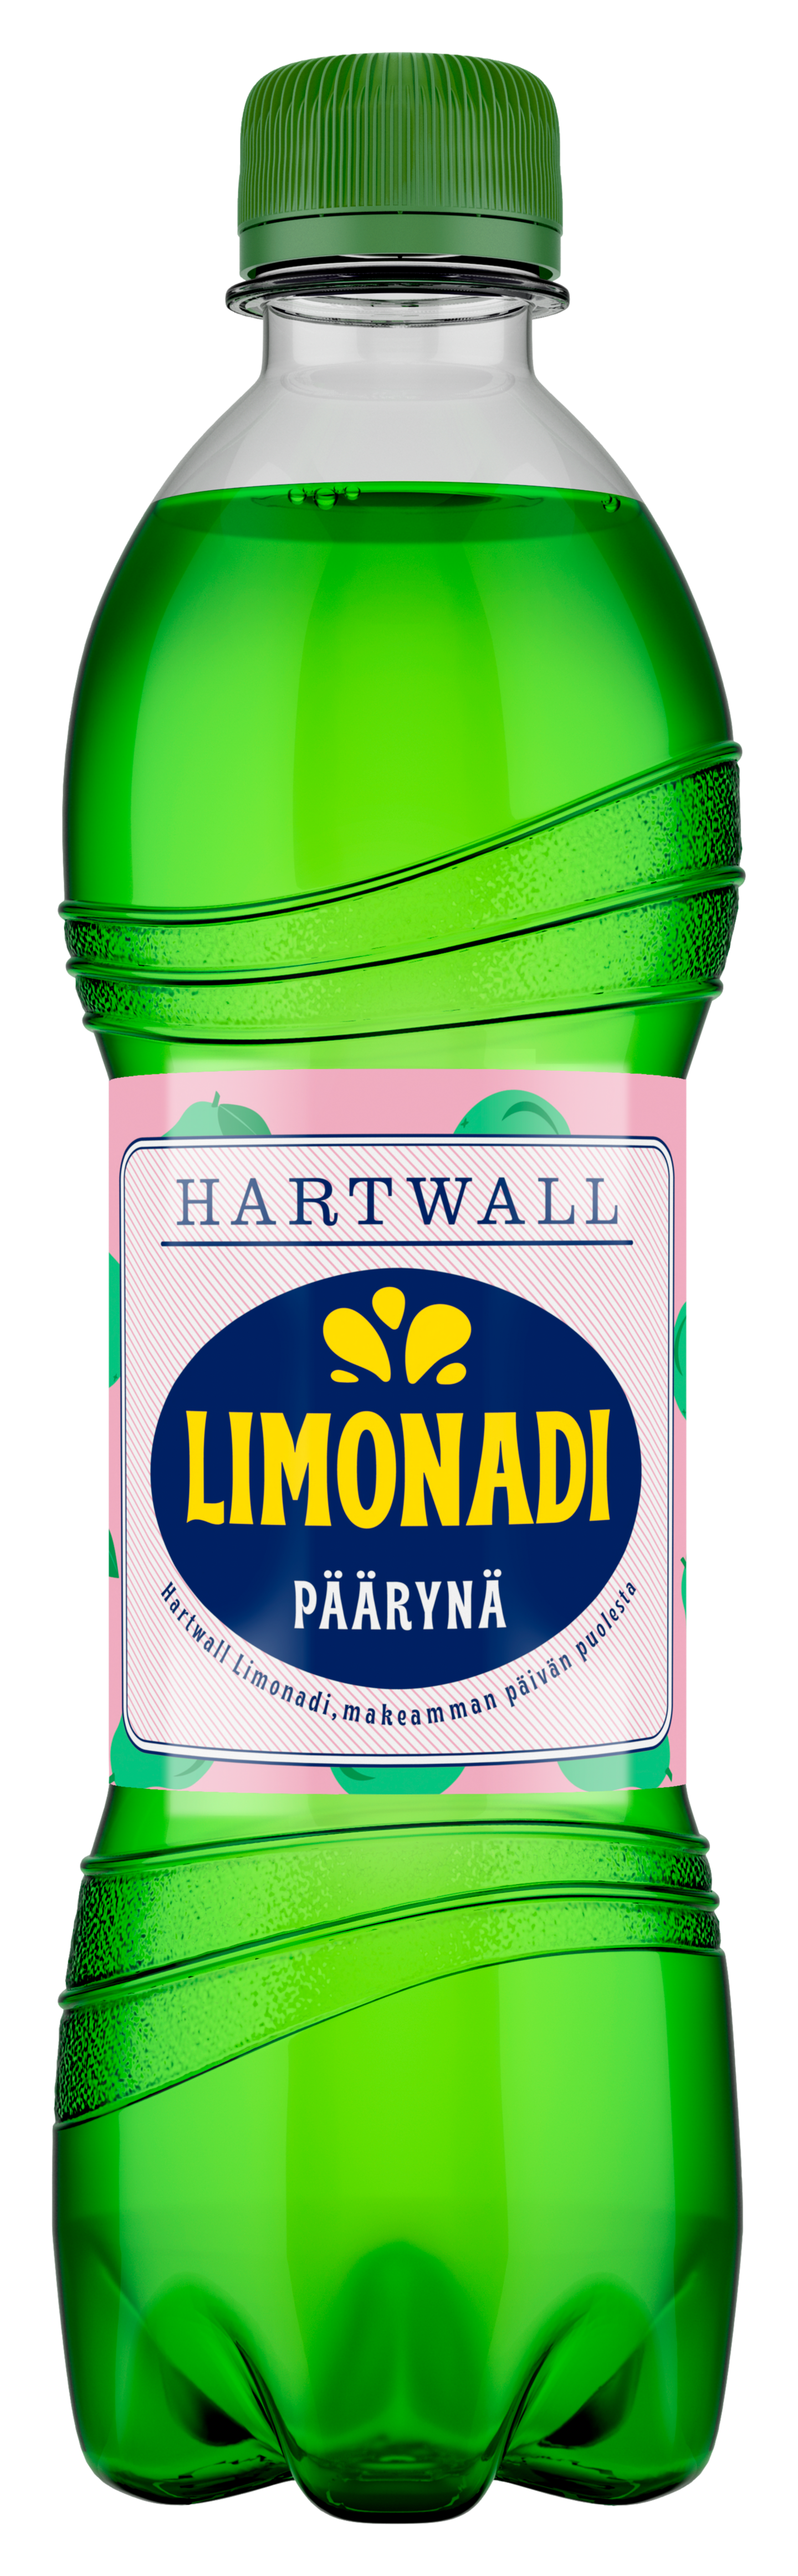 Hartwall Limonadi päärynä 0,5l